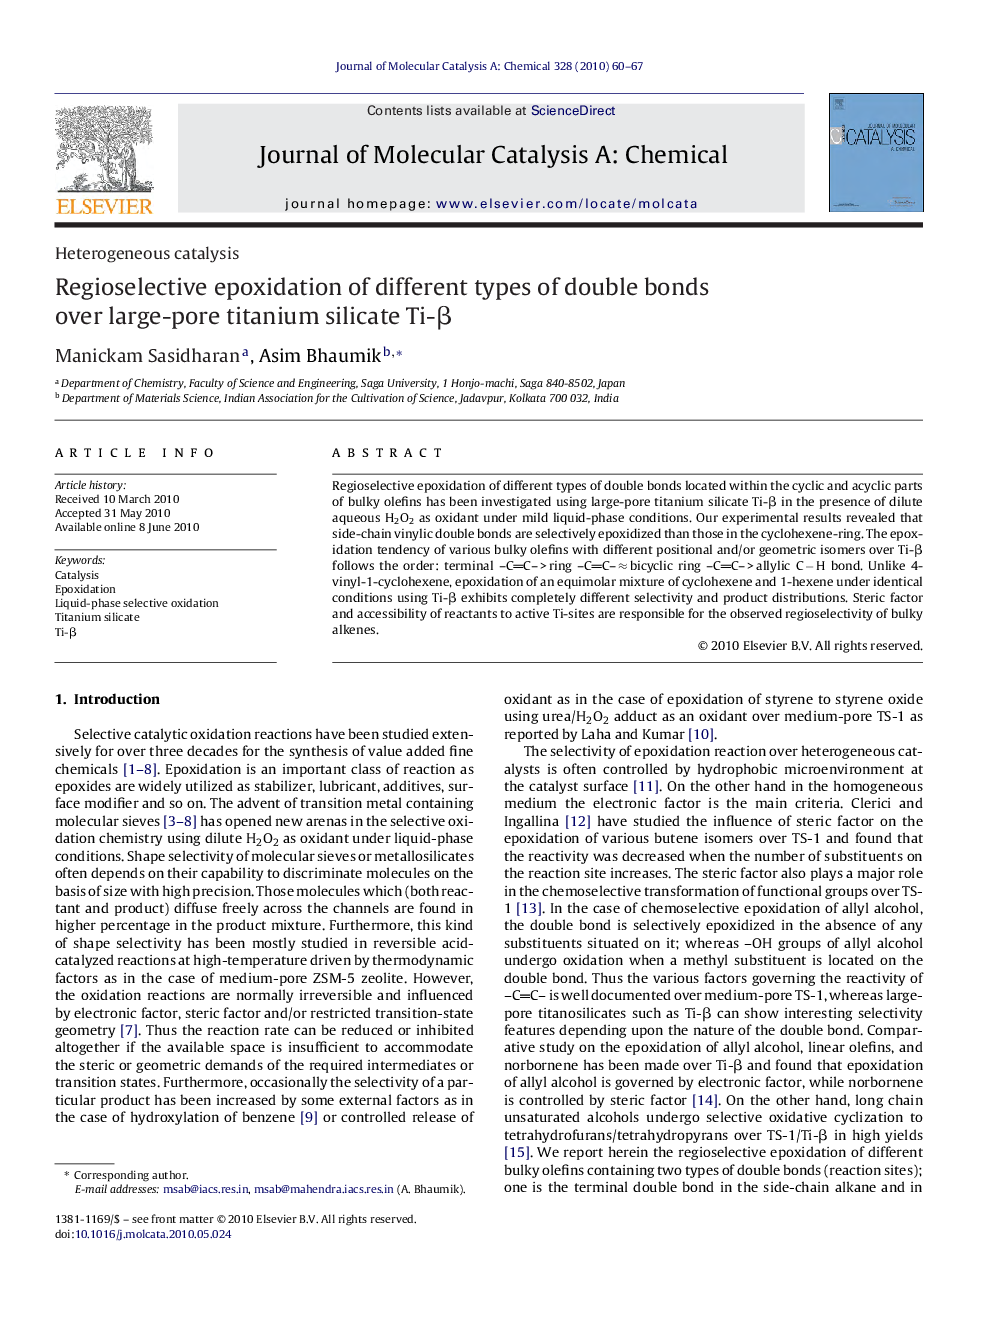 Regioselective epoxidation of different types of double bonds over large-pore titanium silicate Ti-β